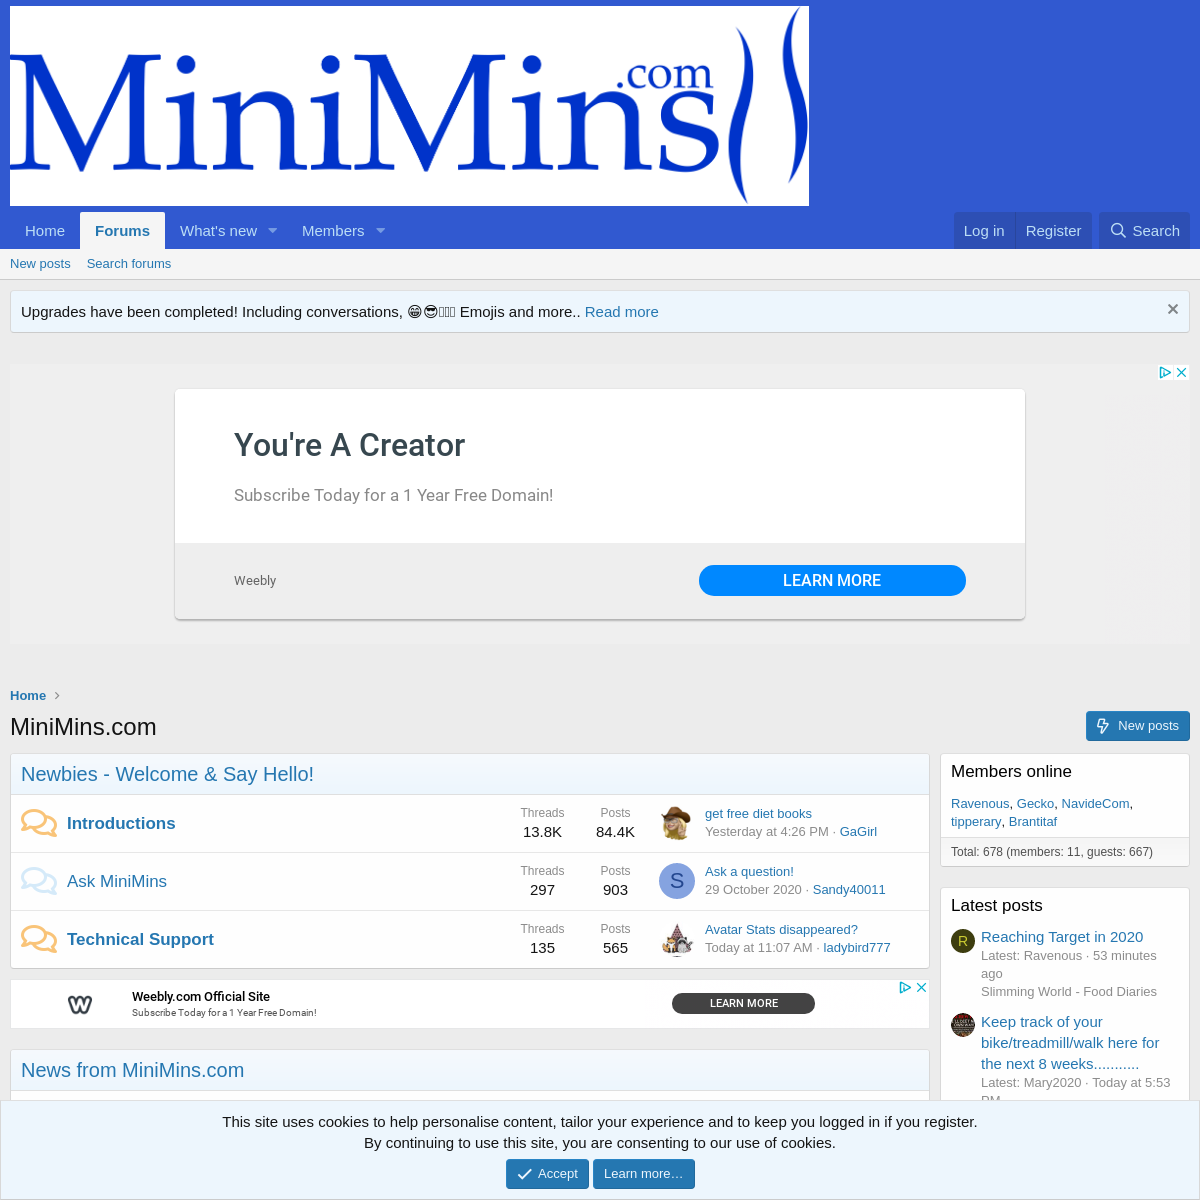 A complete backup of minimins.com